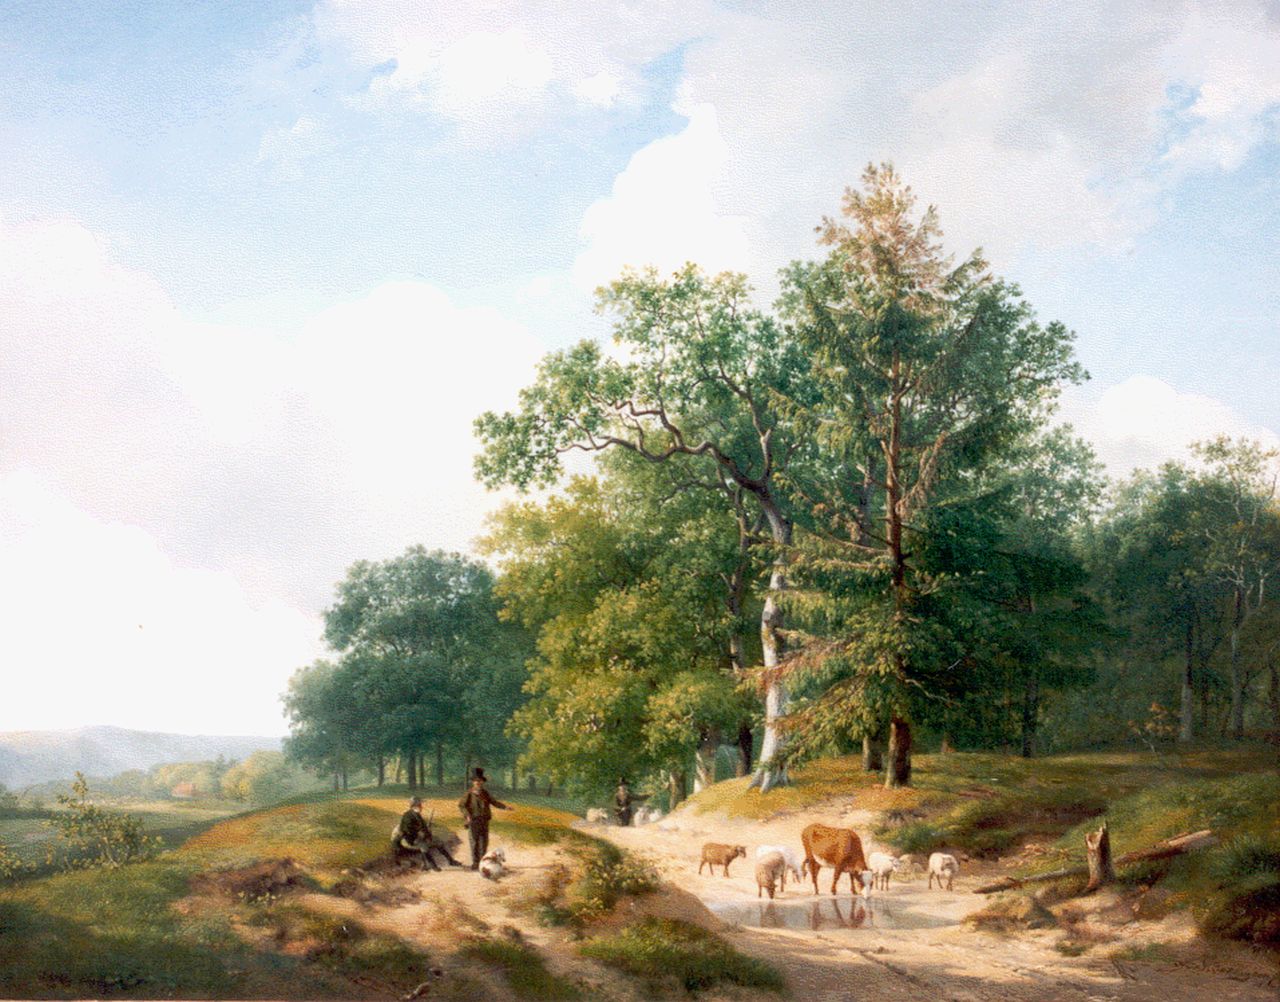 Sande Bakhuyzen H. van de | Hendrikus van de Sande Bakhuyzen, A farmer with cattle in a wooded landscape, oil on panel 51.4 x 62.2 cm, signed l.r. and dated 1825